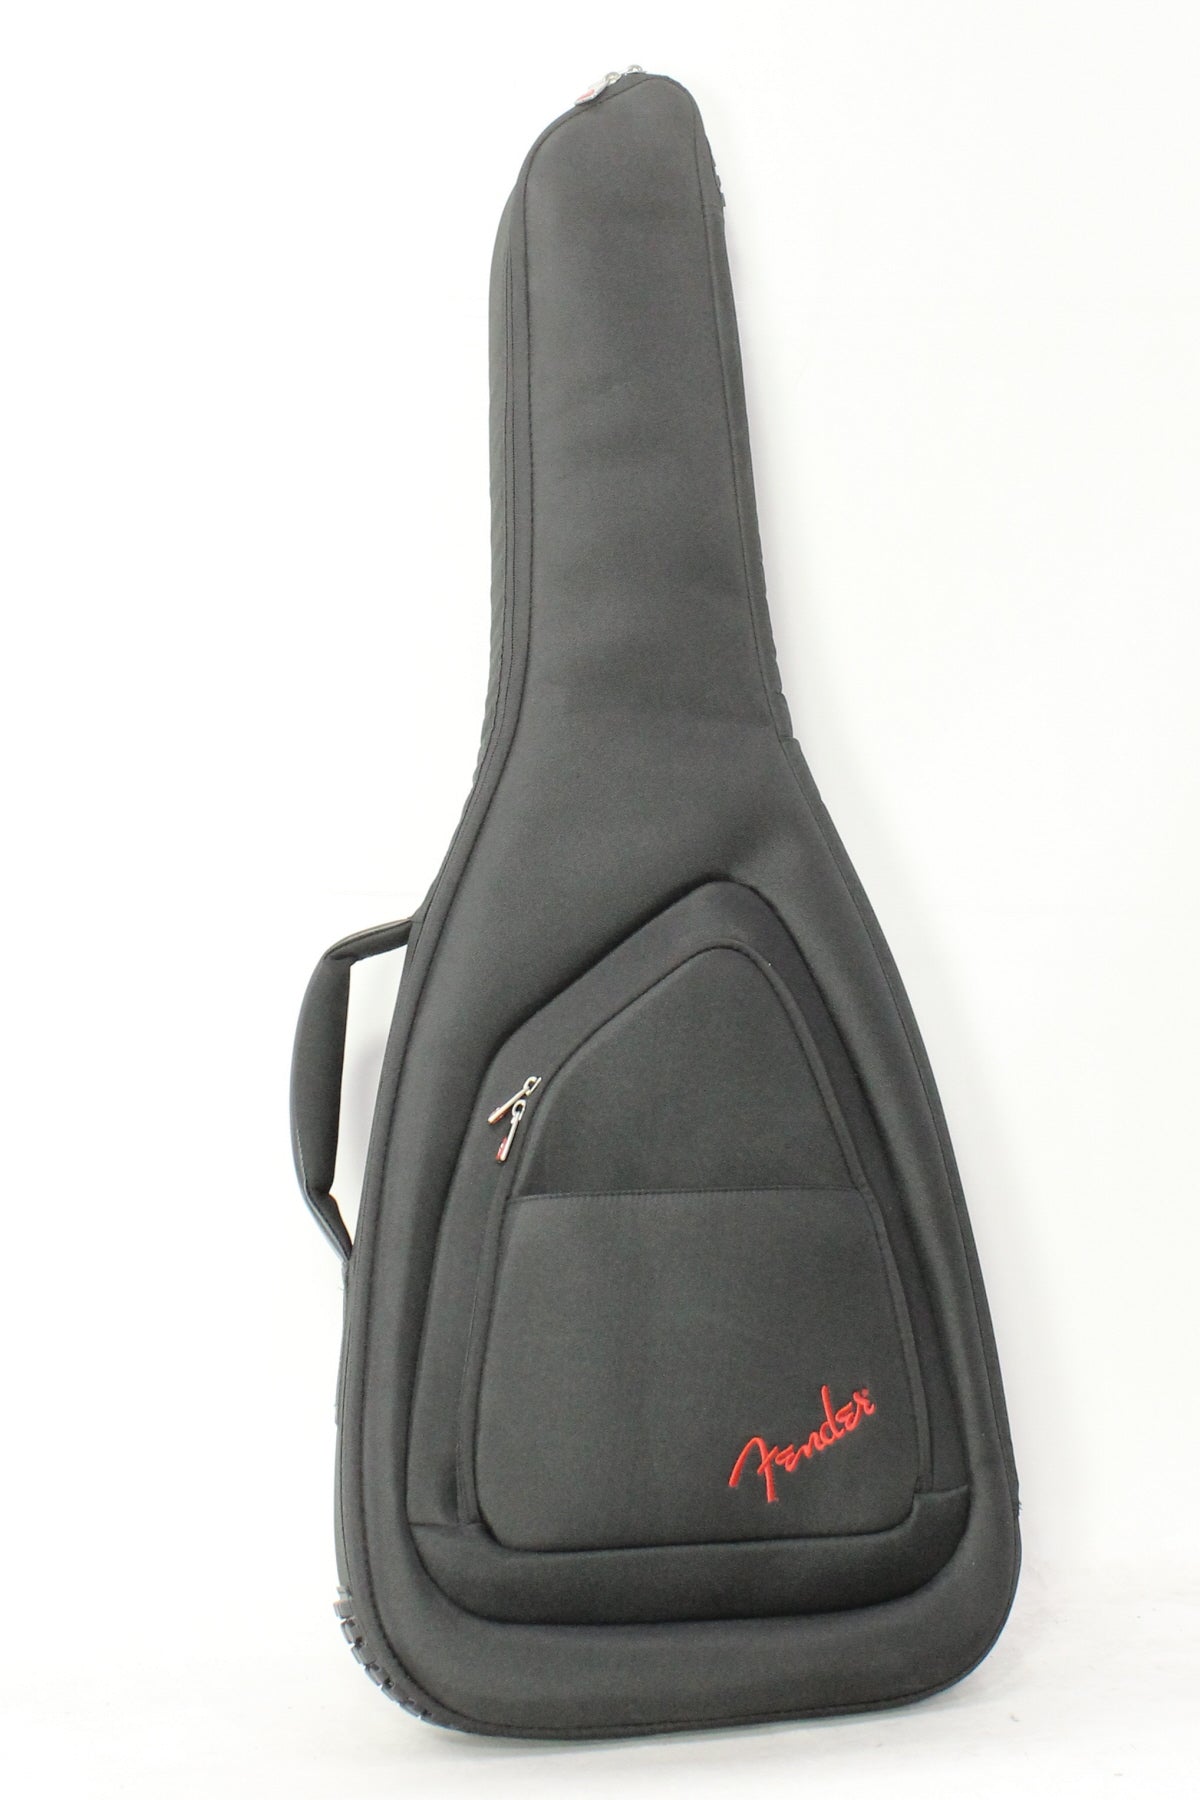 [SN JD21006119] USED Fender / M.I.J. Traditional 50s Stratocaster Black [06]